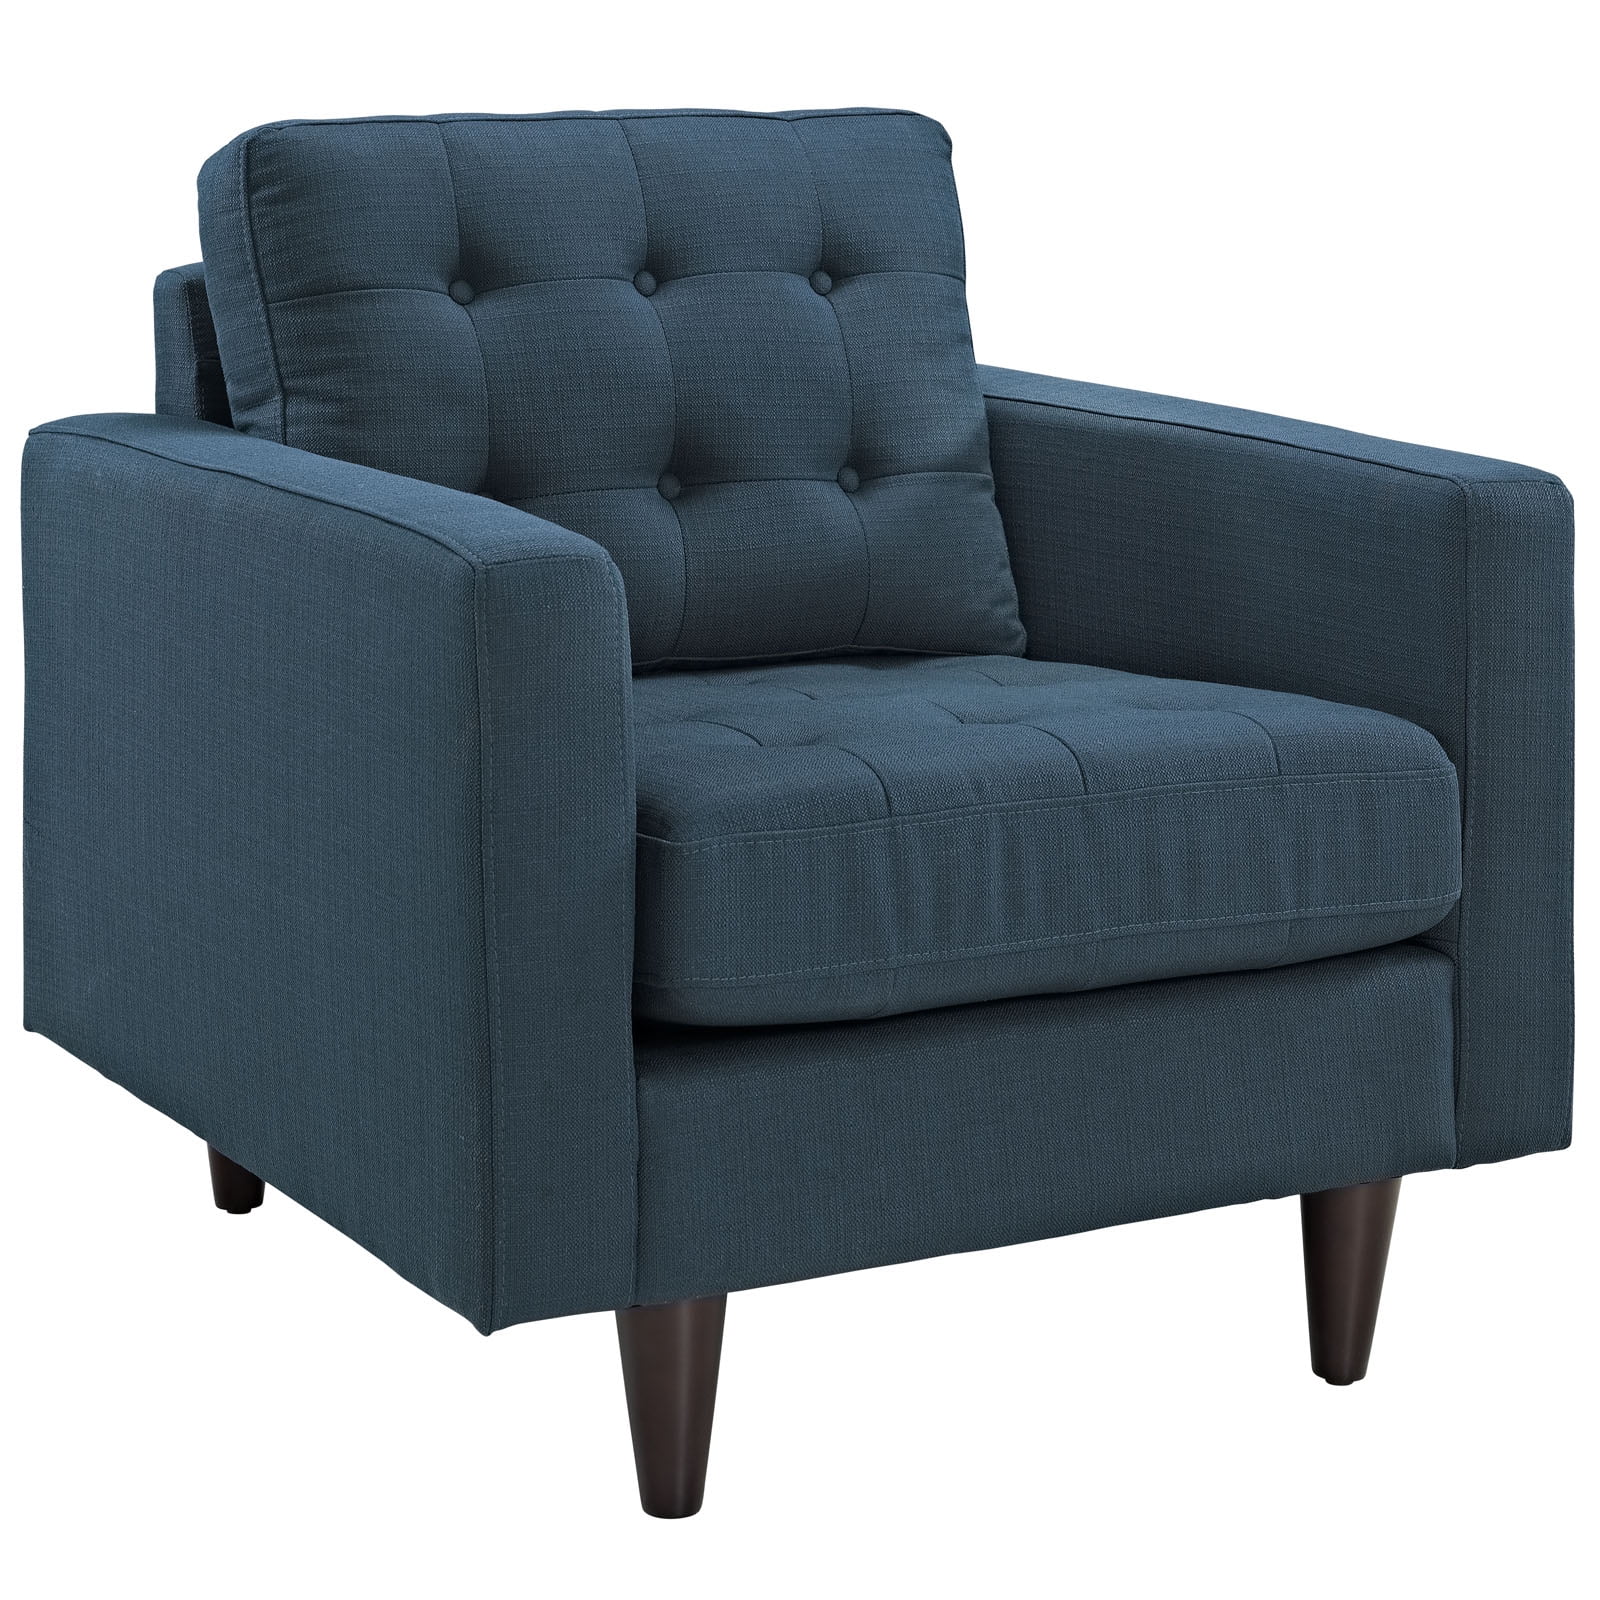 Upholstered Fabric Armchair - Walmart.com - Walmart.com